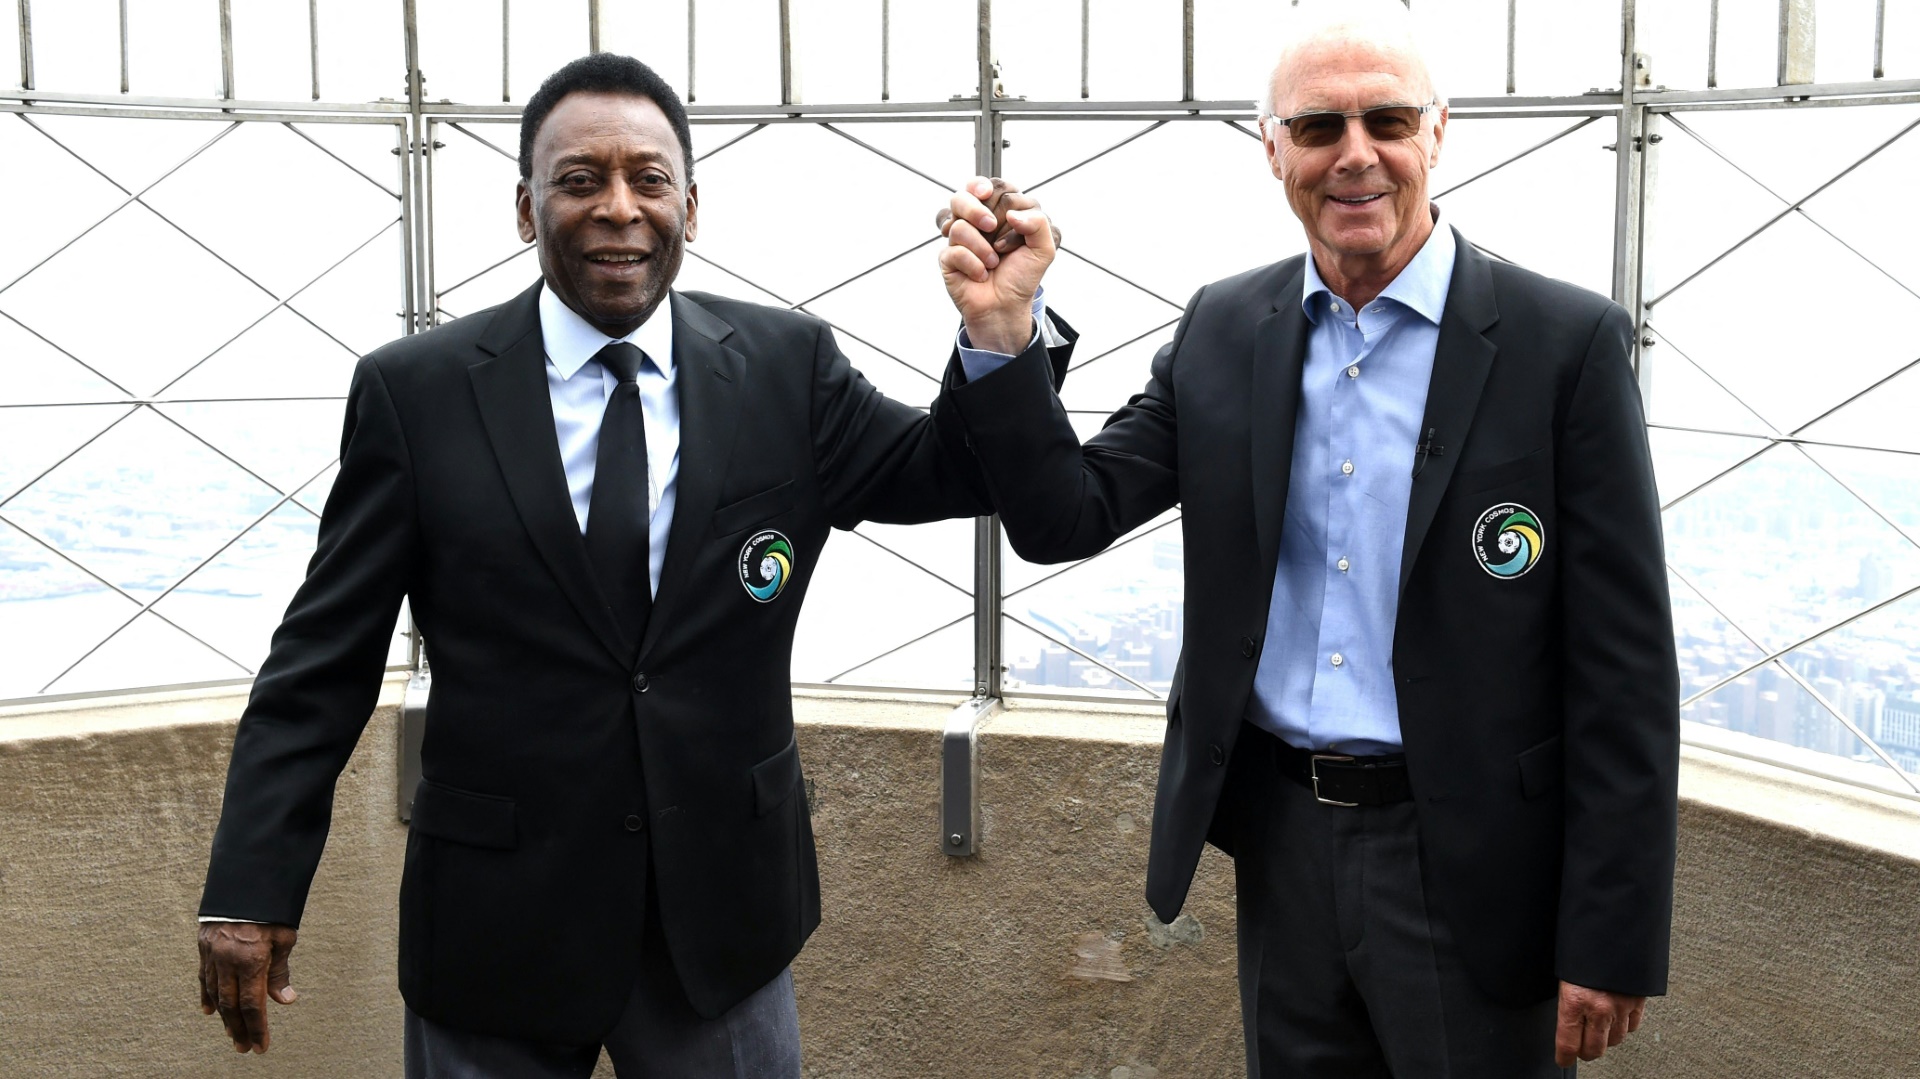 Lebenslange Freundschaft: Pele und Franz Beckenbauer